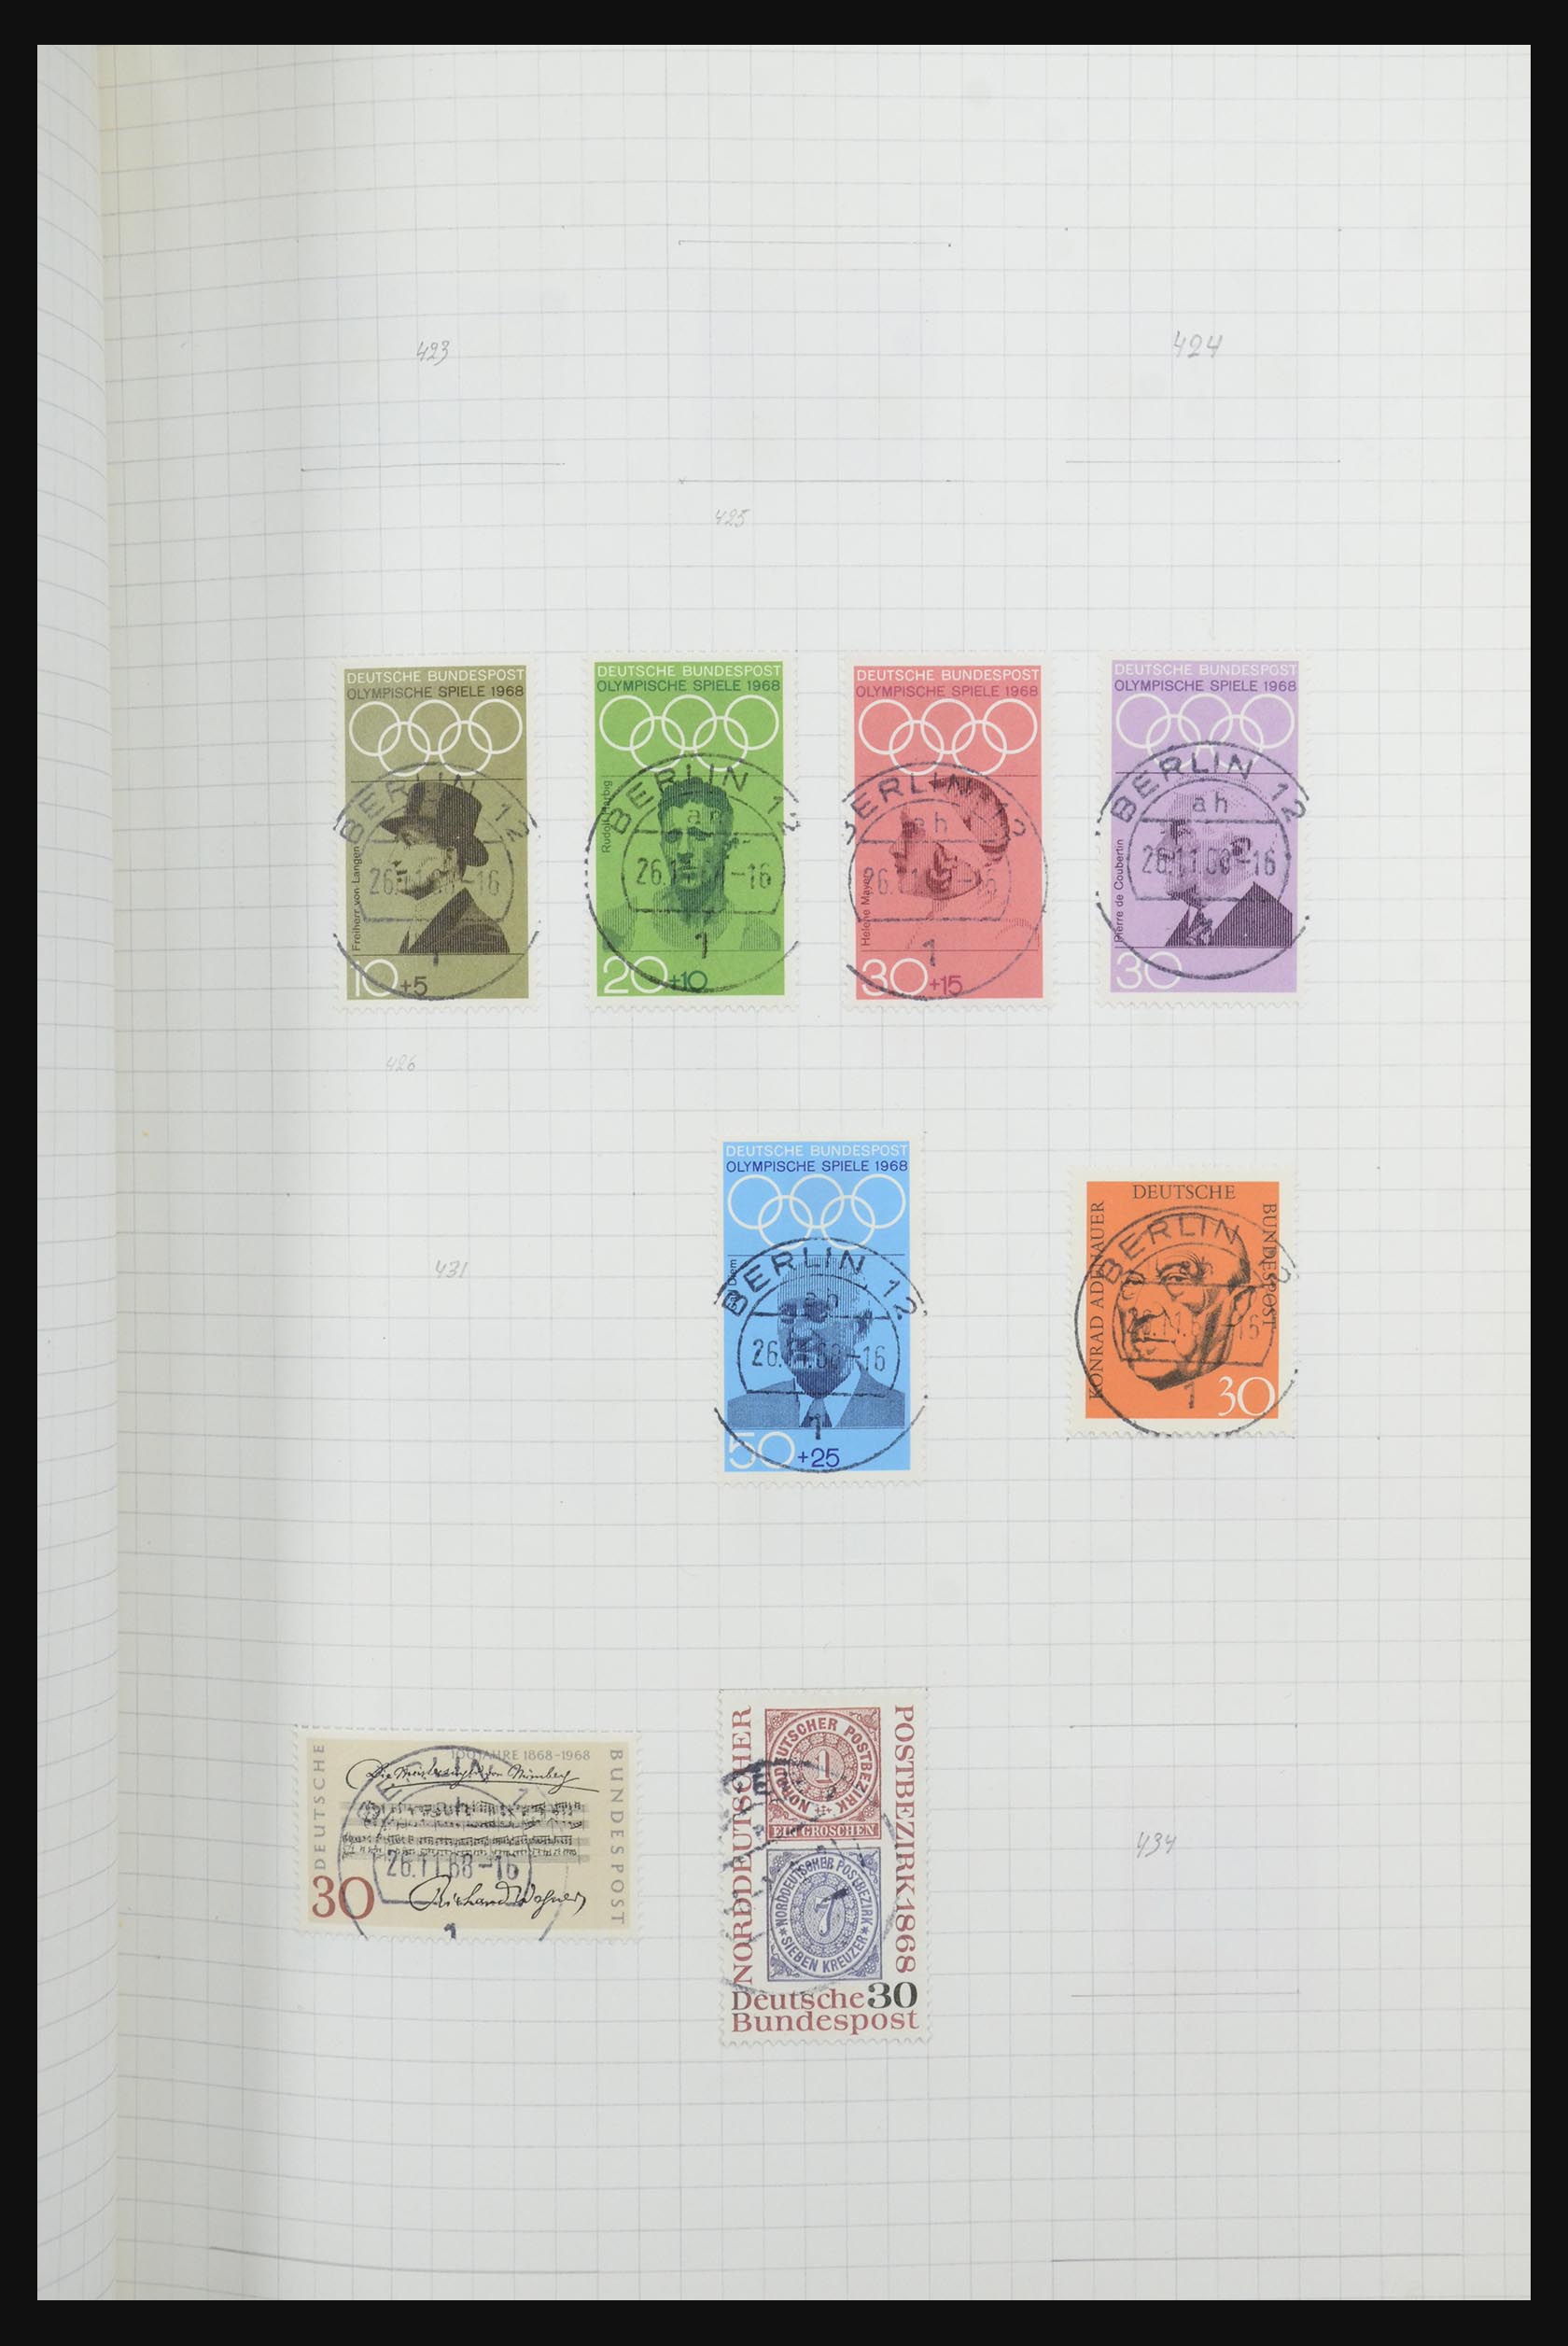 32398 047 - 32398 Bundespost and Berlin 1948-1984.